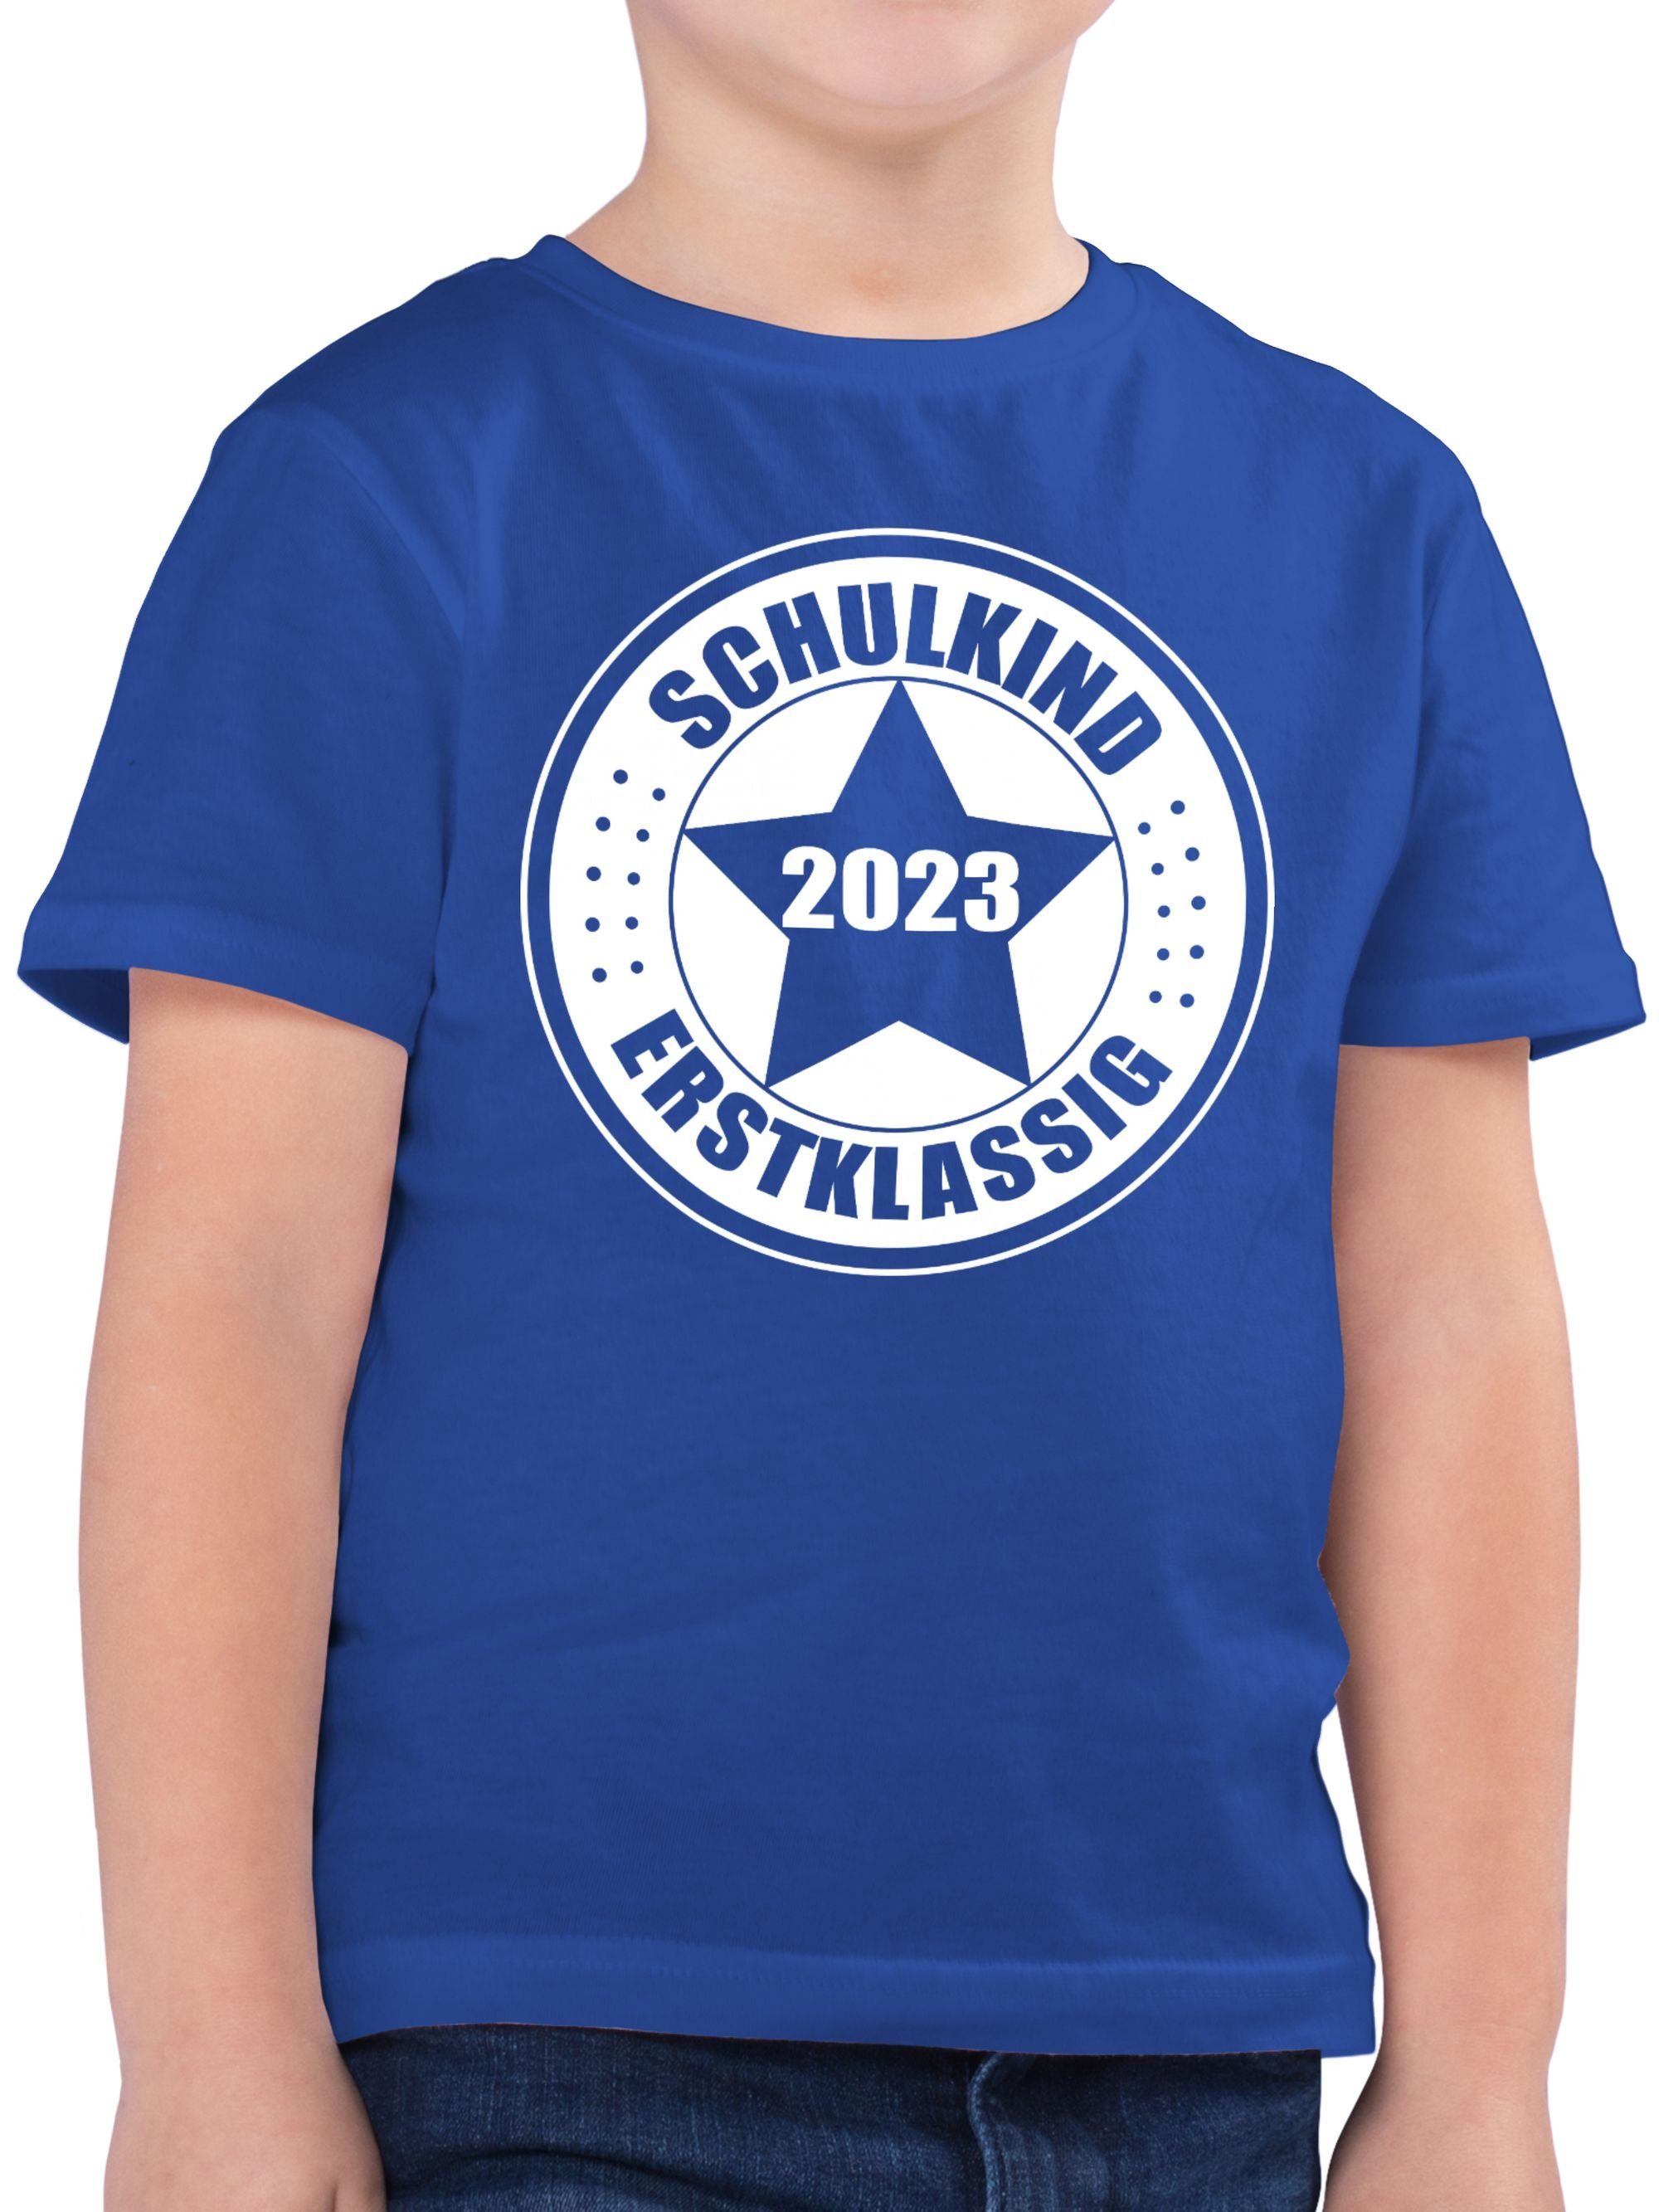 Shirtracer T-Shirt Schulkind 2023 - Erstklassig Einschulung Junge Schulanfang Geschenke 03 Royalblau